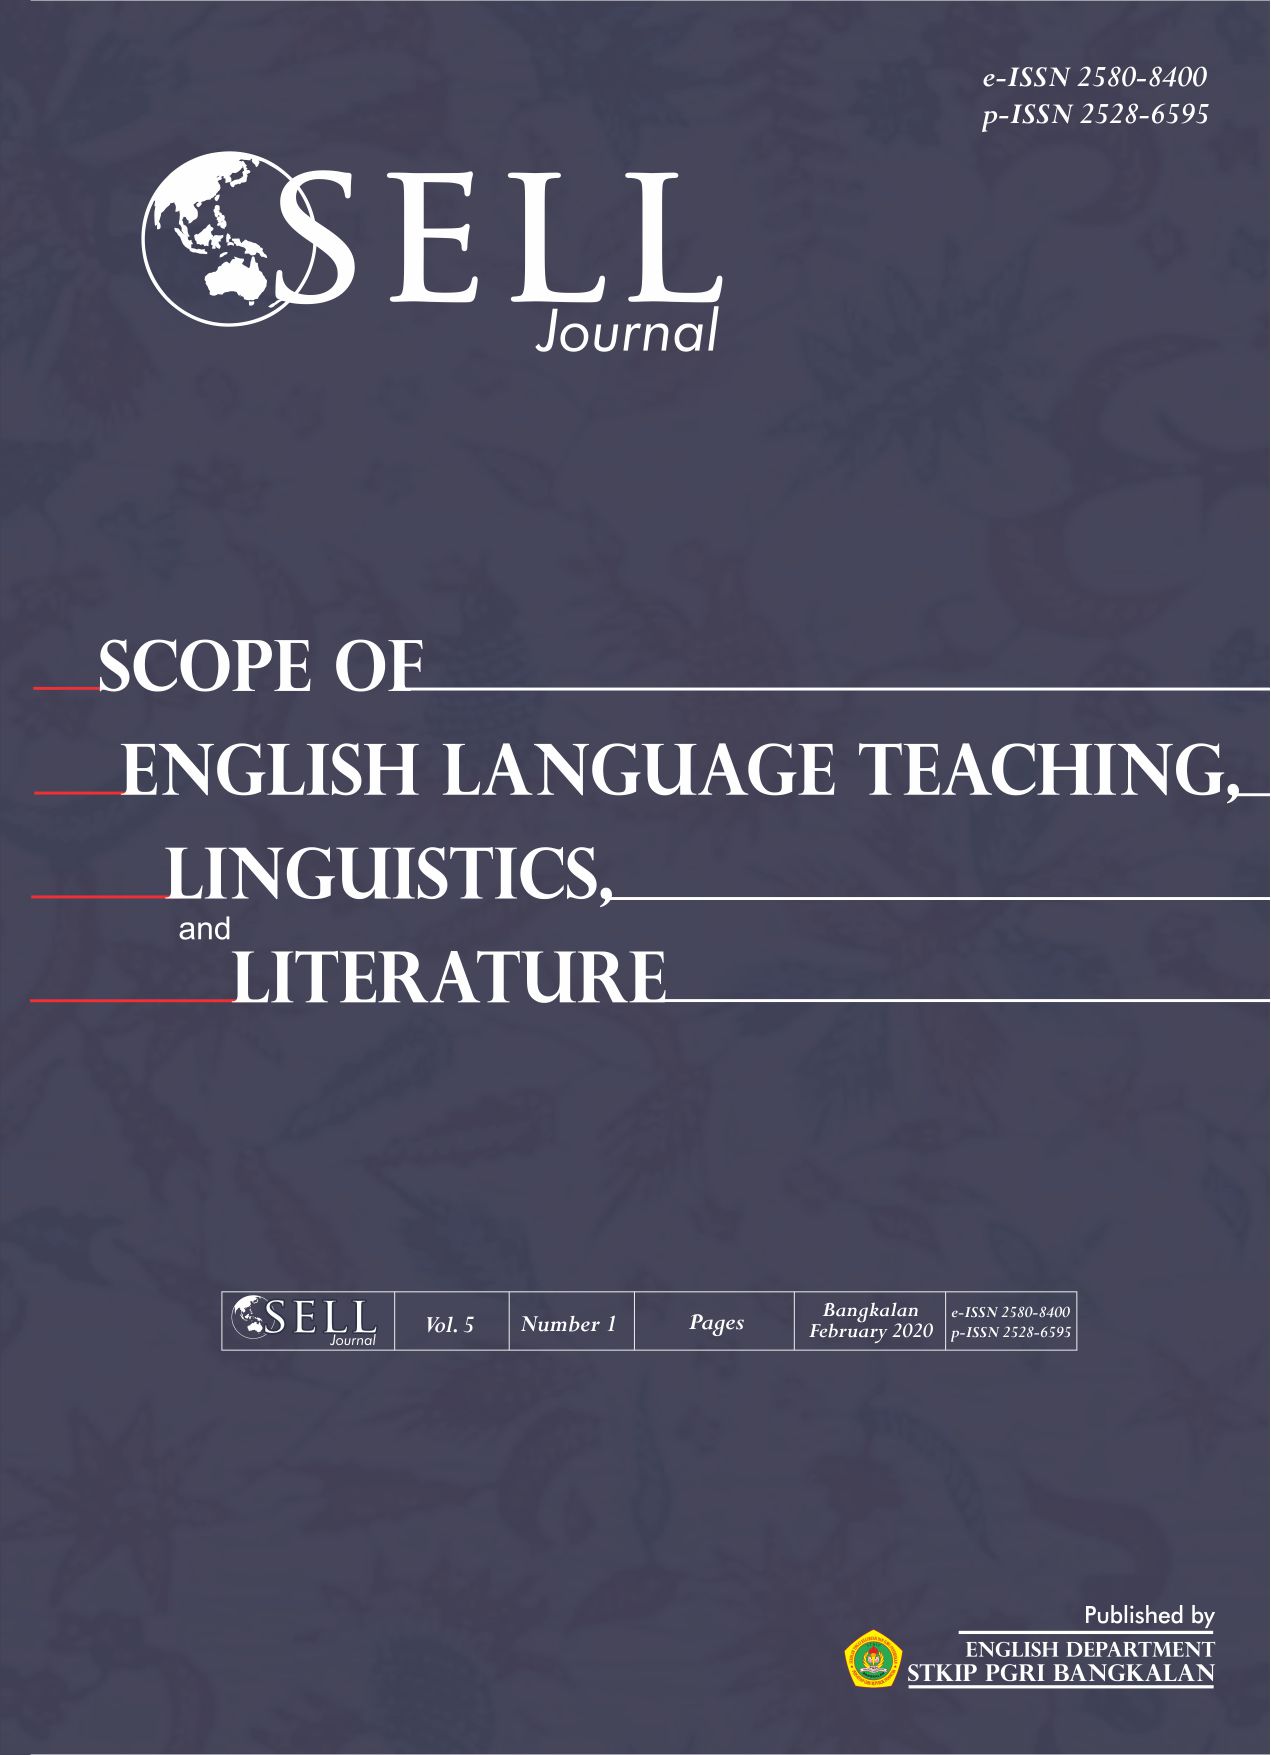 Scope of English Language Teaching, Linguistics, and Literature